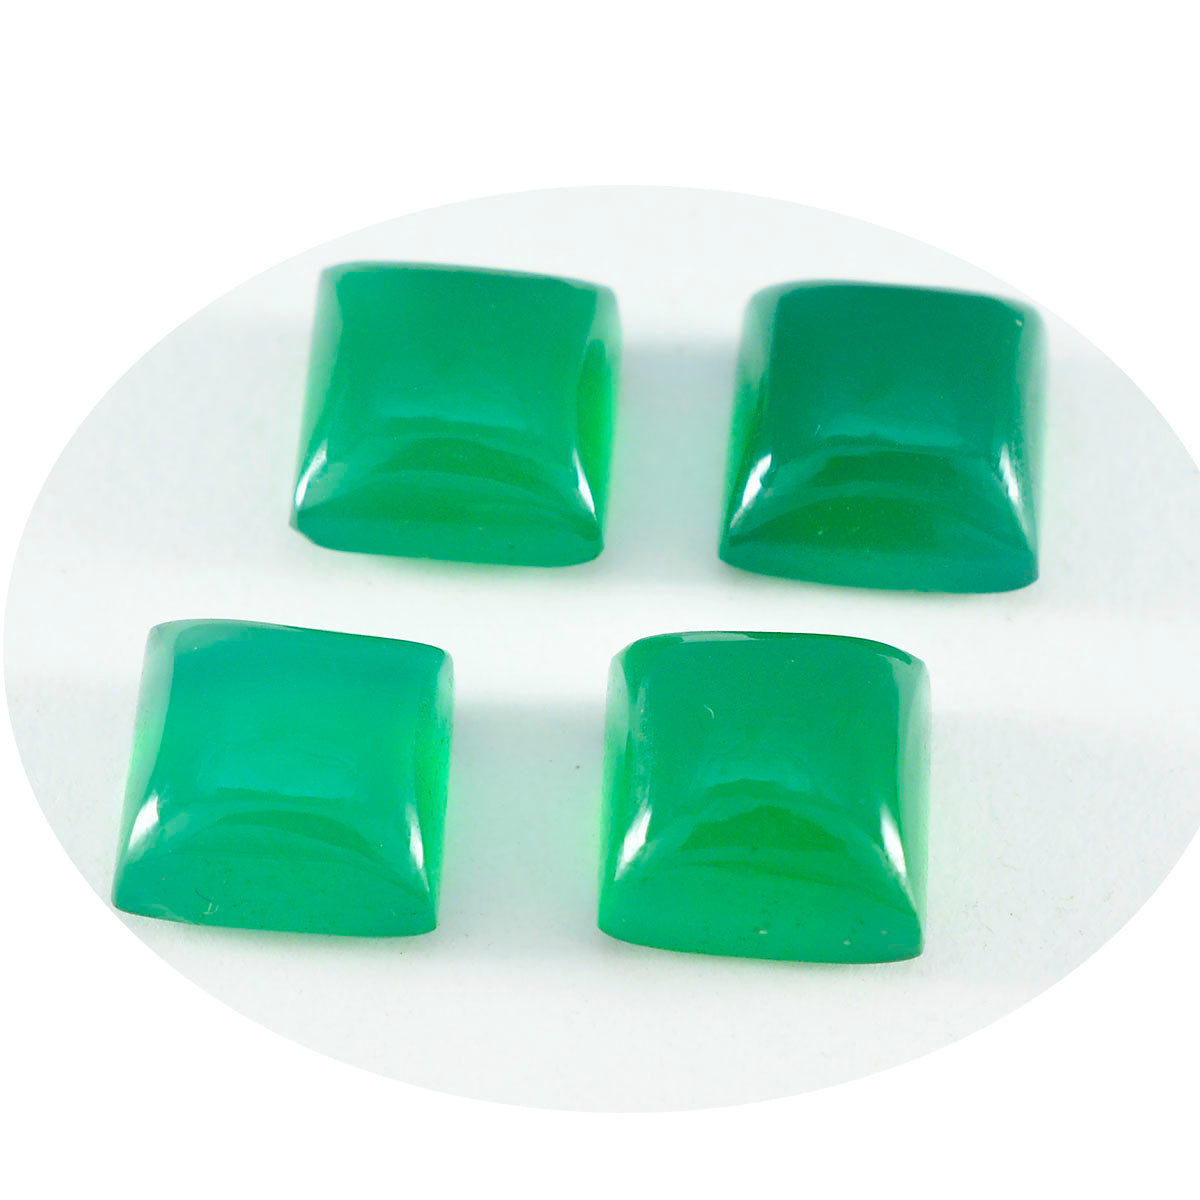 Riyogems 1PC Green Onyx Cabochon 12x12 mm Square Shape good-looking Quality Gemstone